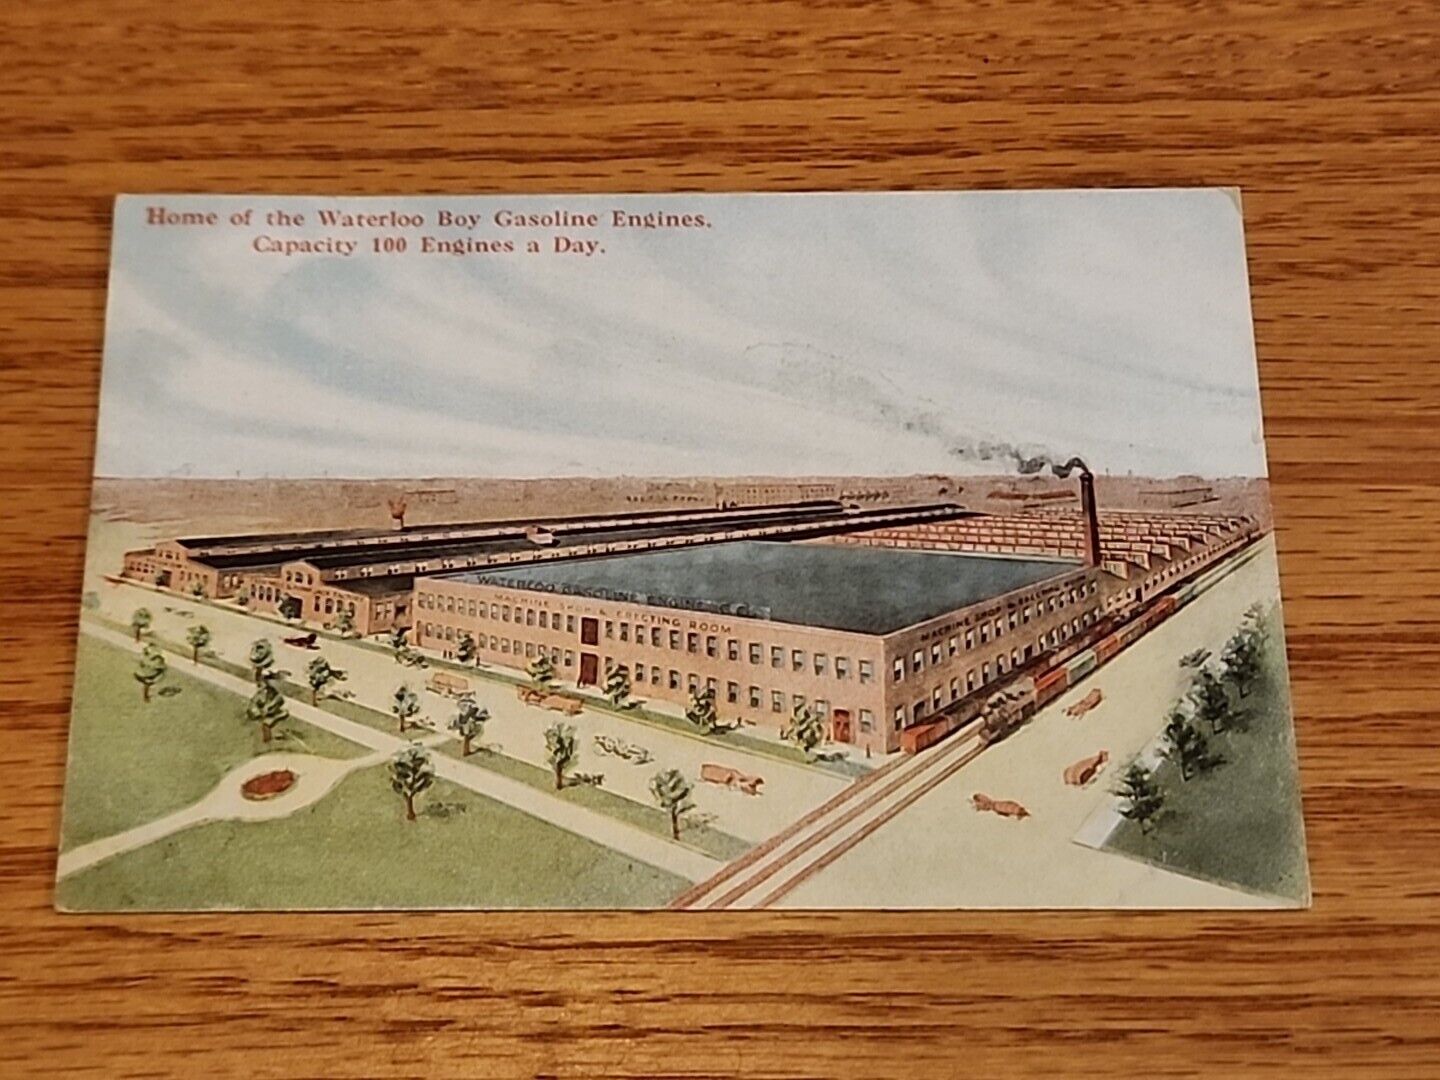 Waterloo Boy Gas Engine Factory Postcard 1912 Hit Miss